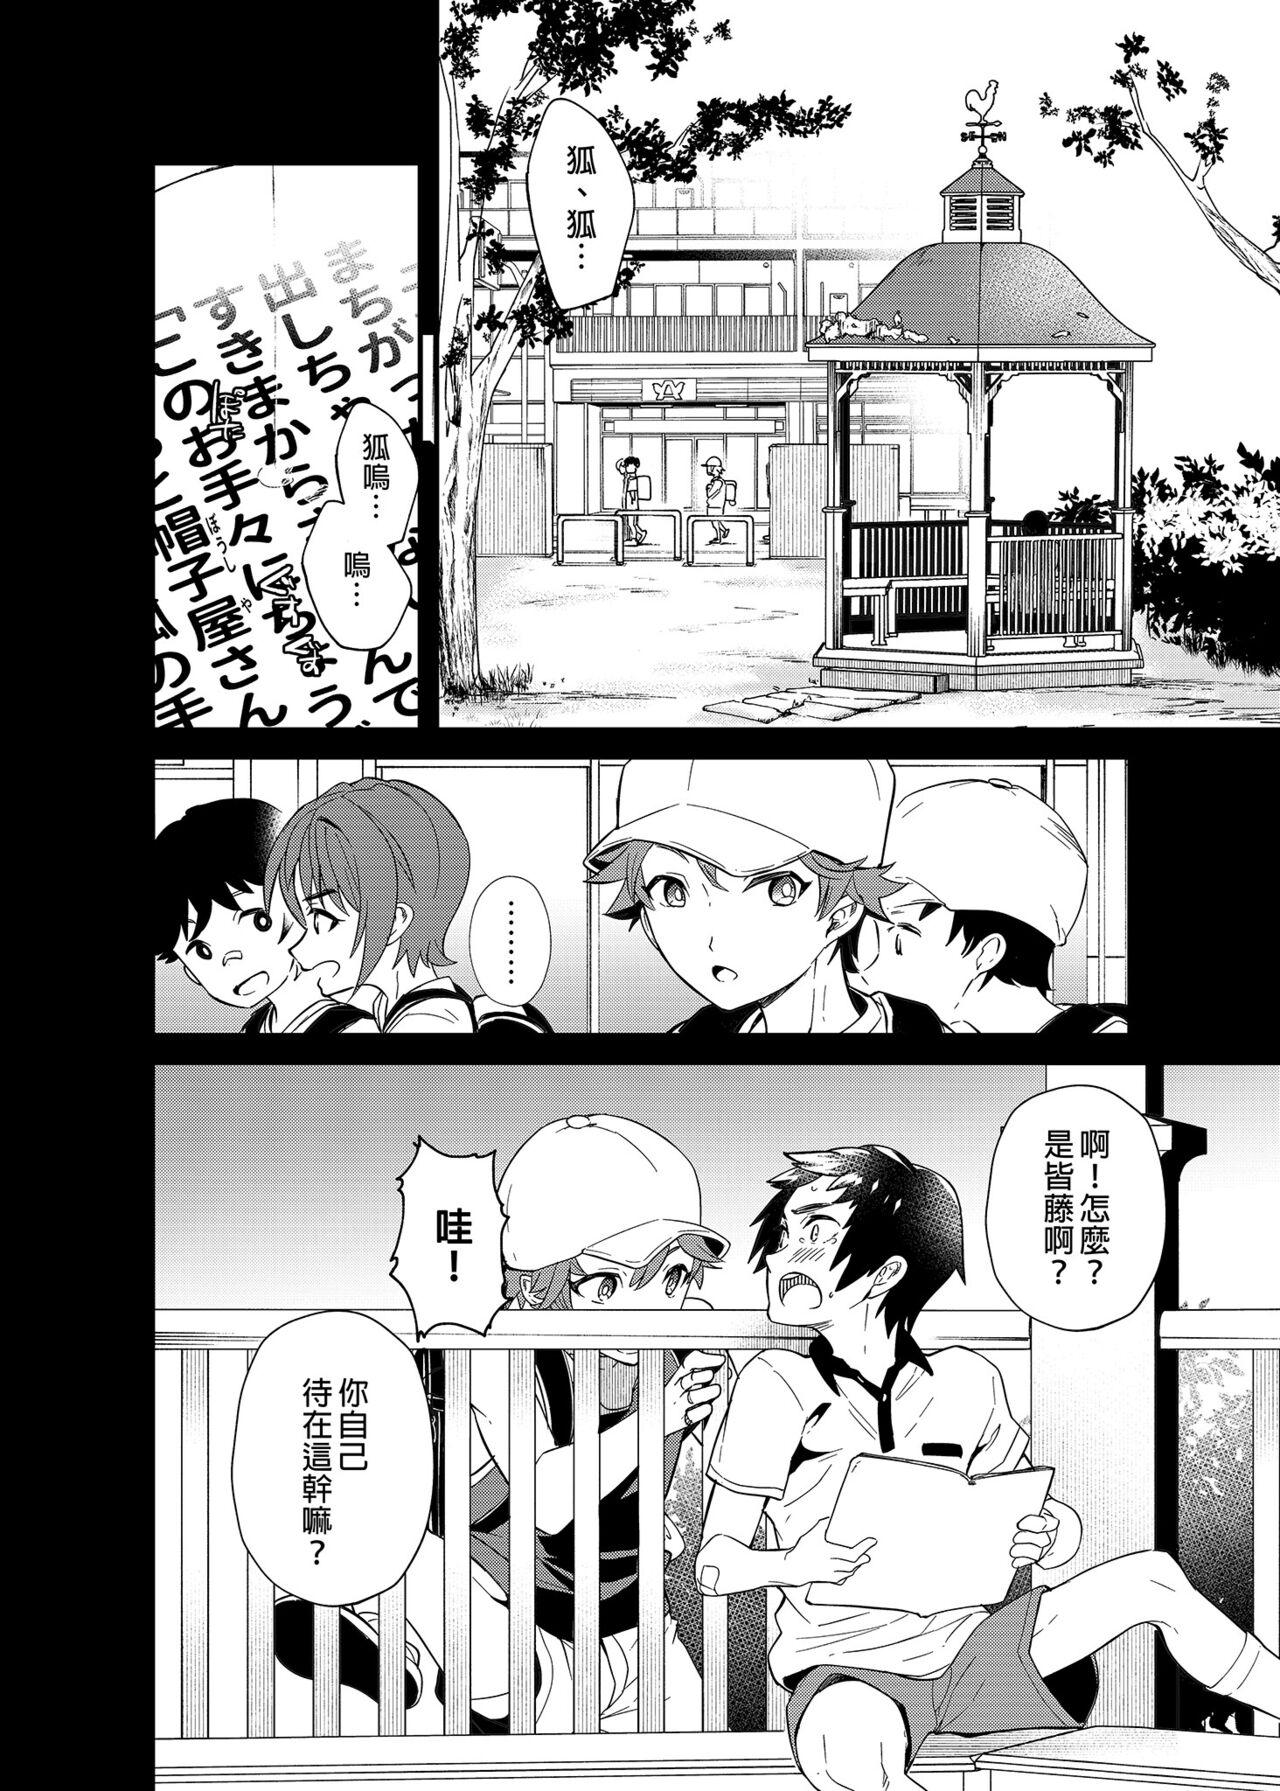 Fucked Kiritsu,ki o tsuke, rei! | 起立、注意、敬禮! - Original Squirt - Page 9